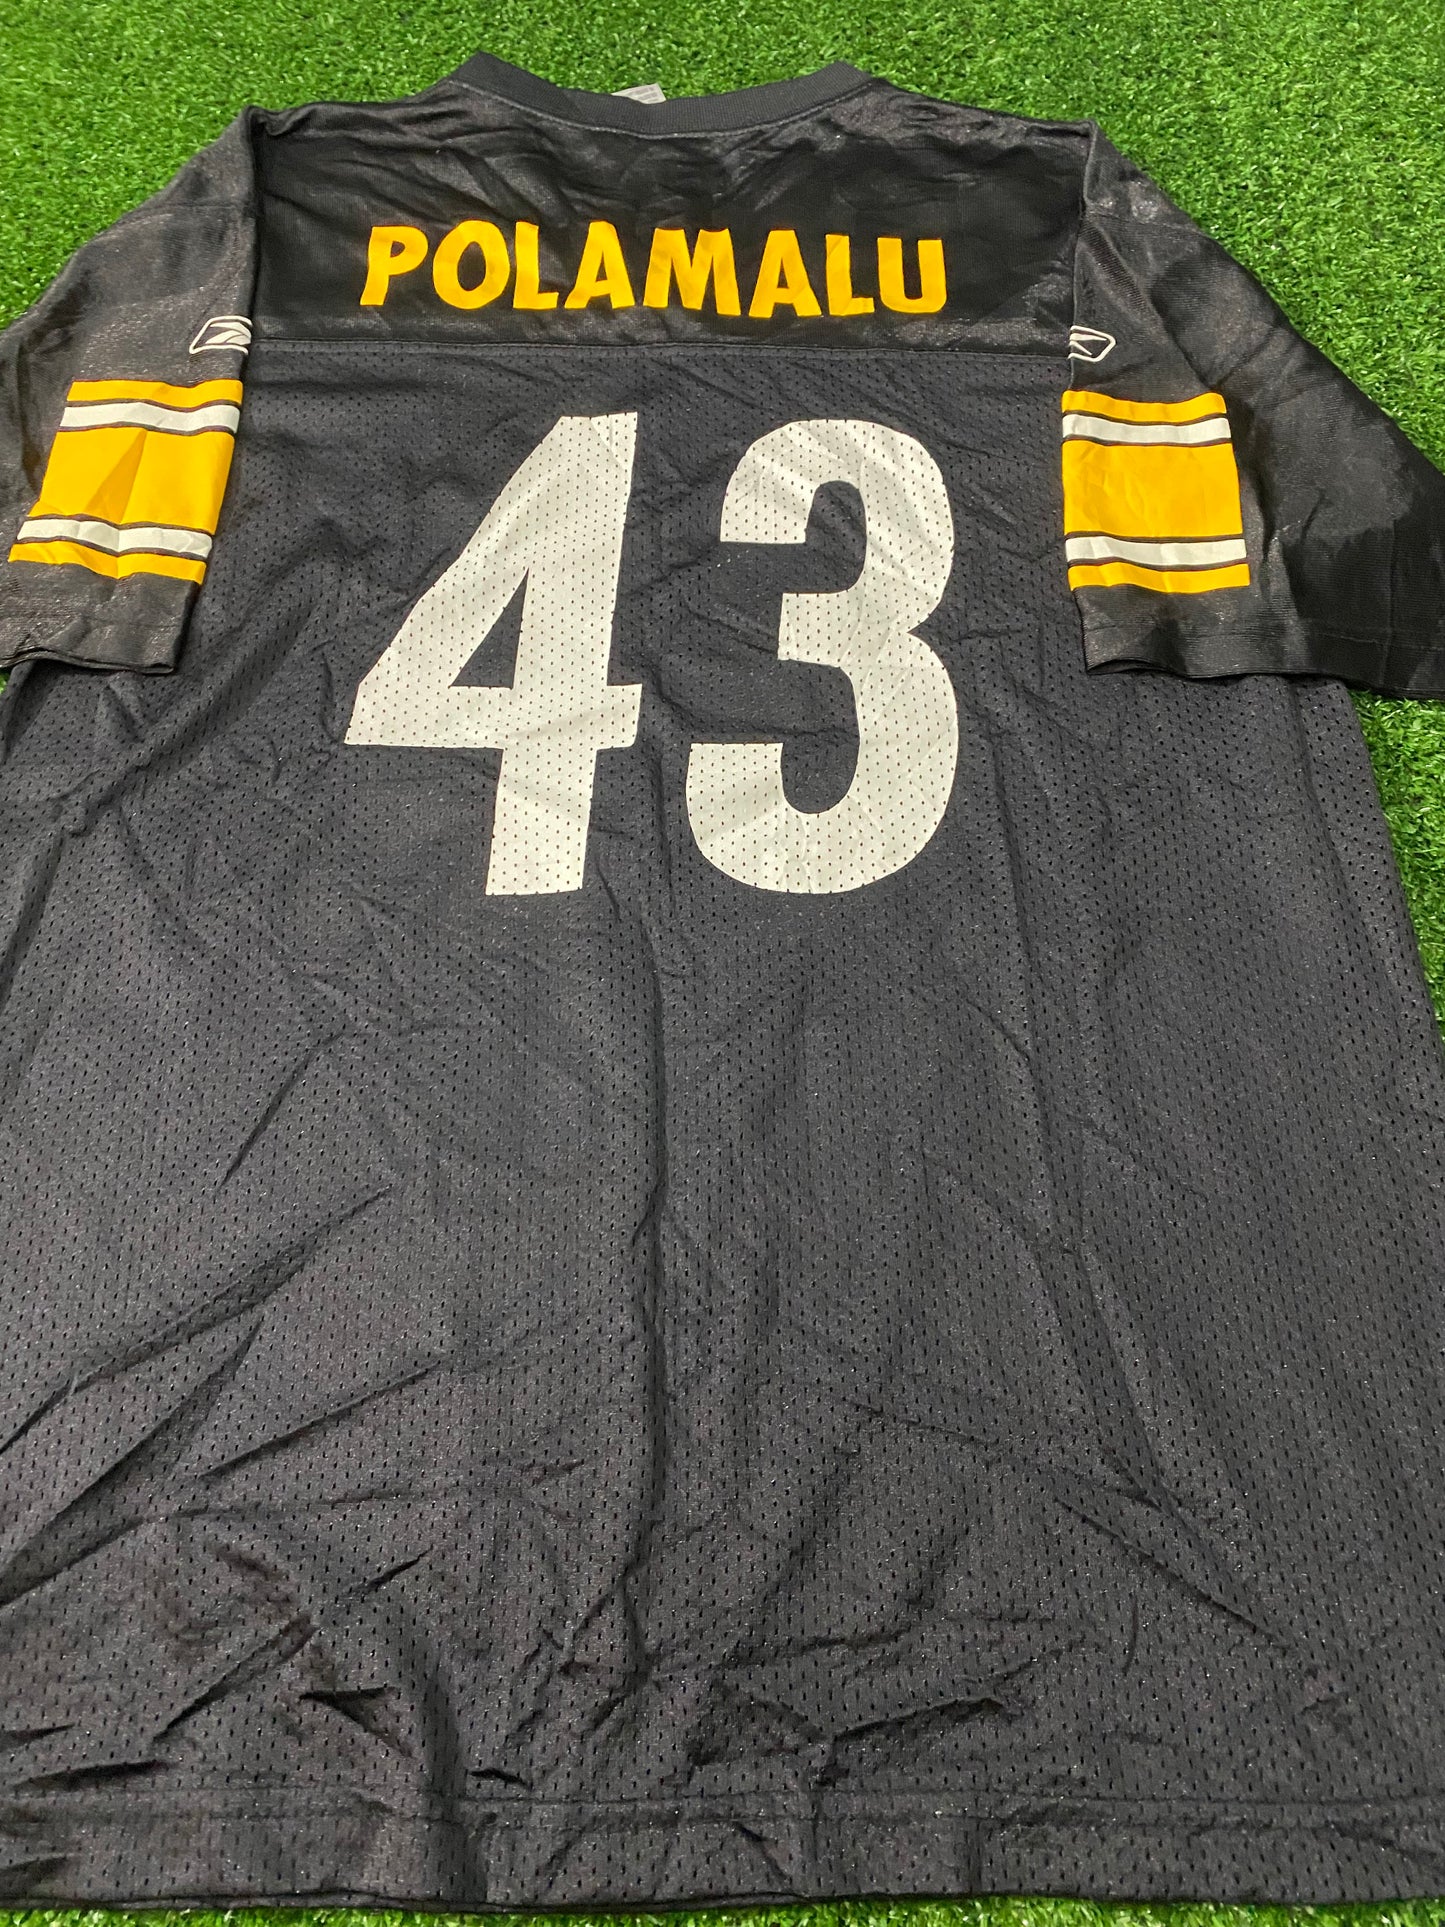 Pittsburgh Steelers USA NFL American Football Youths / Small Mans Polamalu no43 Reebok Jersey